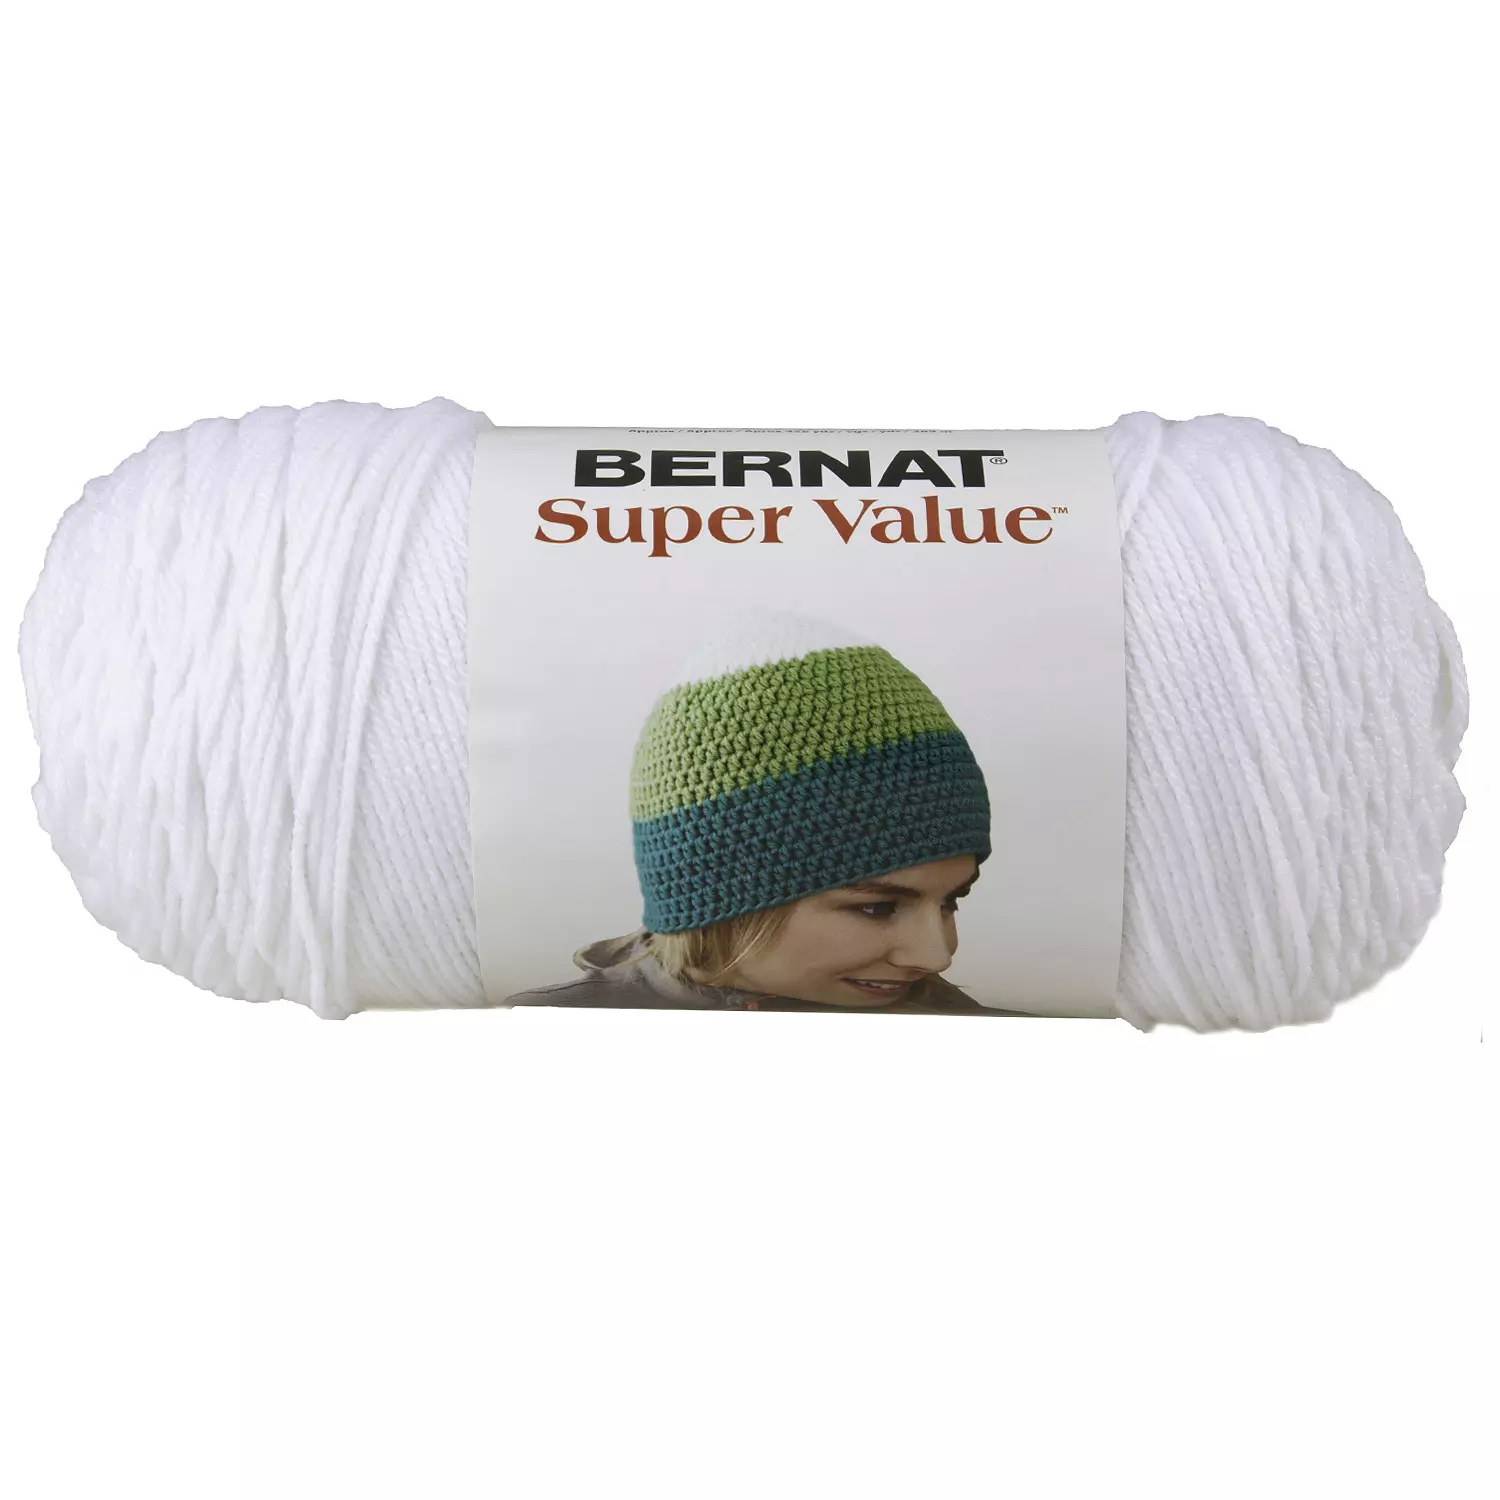 Bernat Super Value - Acrylic yarn, white